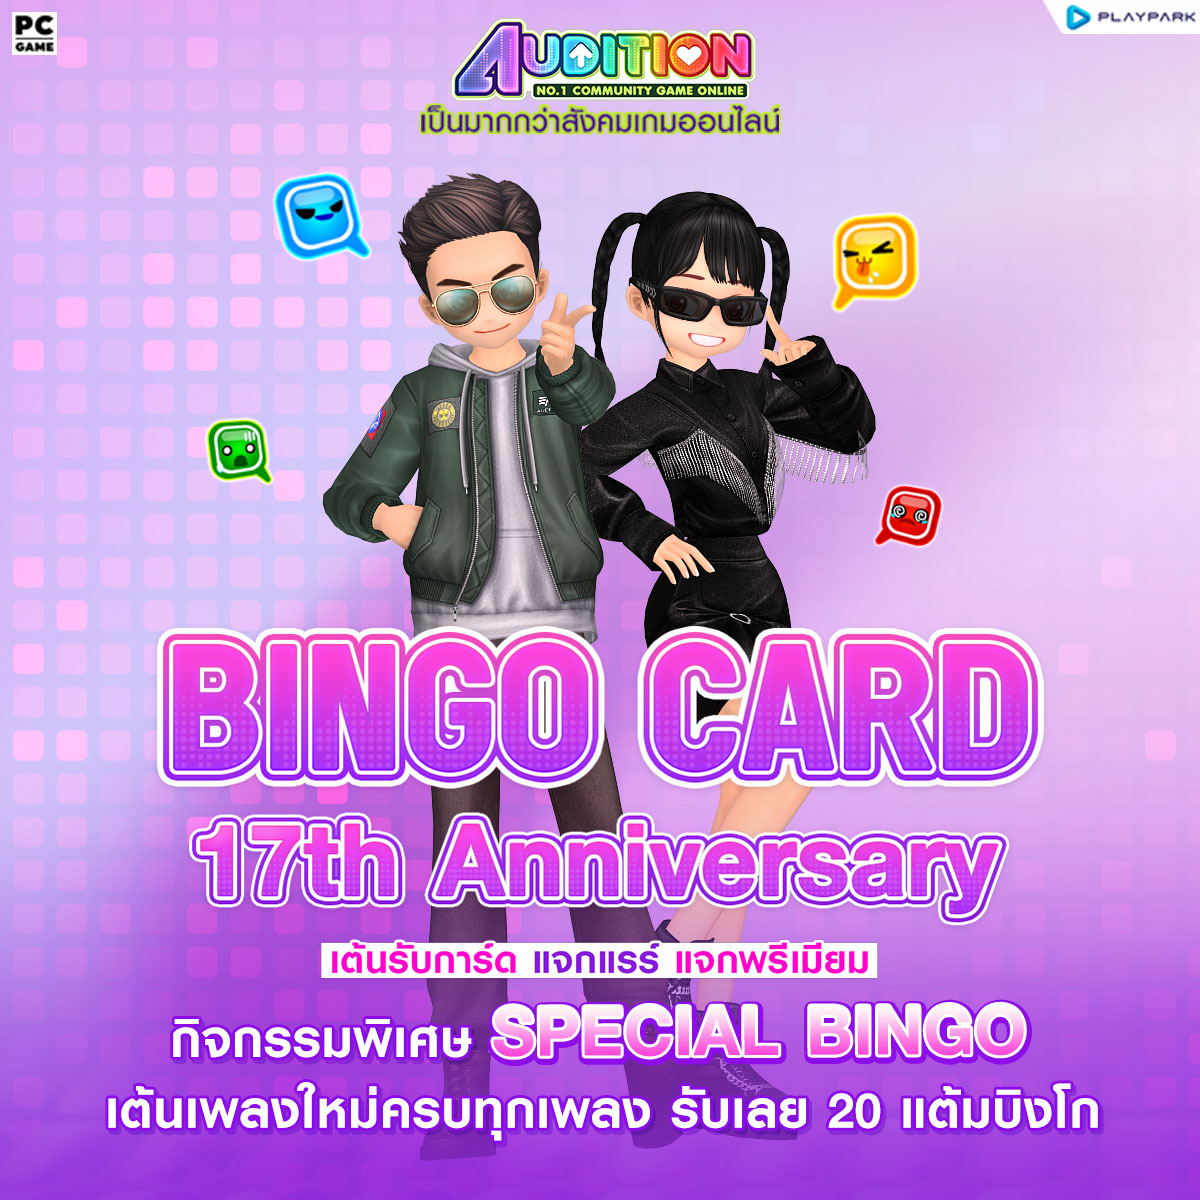 PATCH UPDATE 6 กันยายน: เพลงใหม่, Special Bingo, Couple Ring, Mascot Salon และไอเทมใหม่!!  